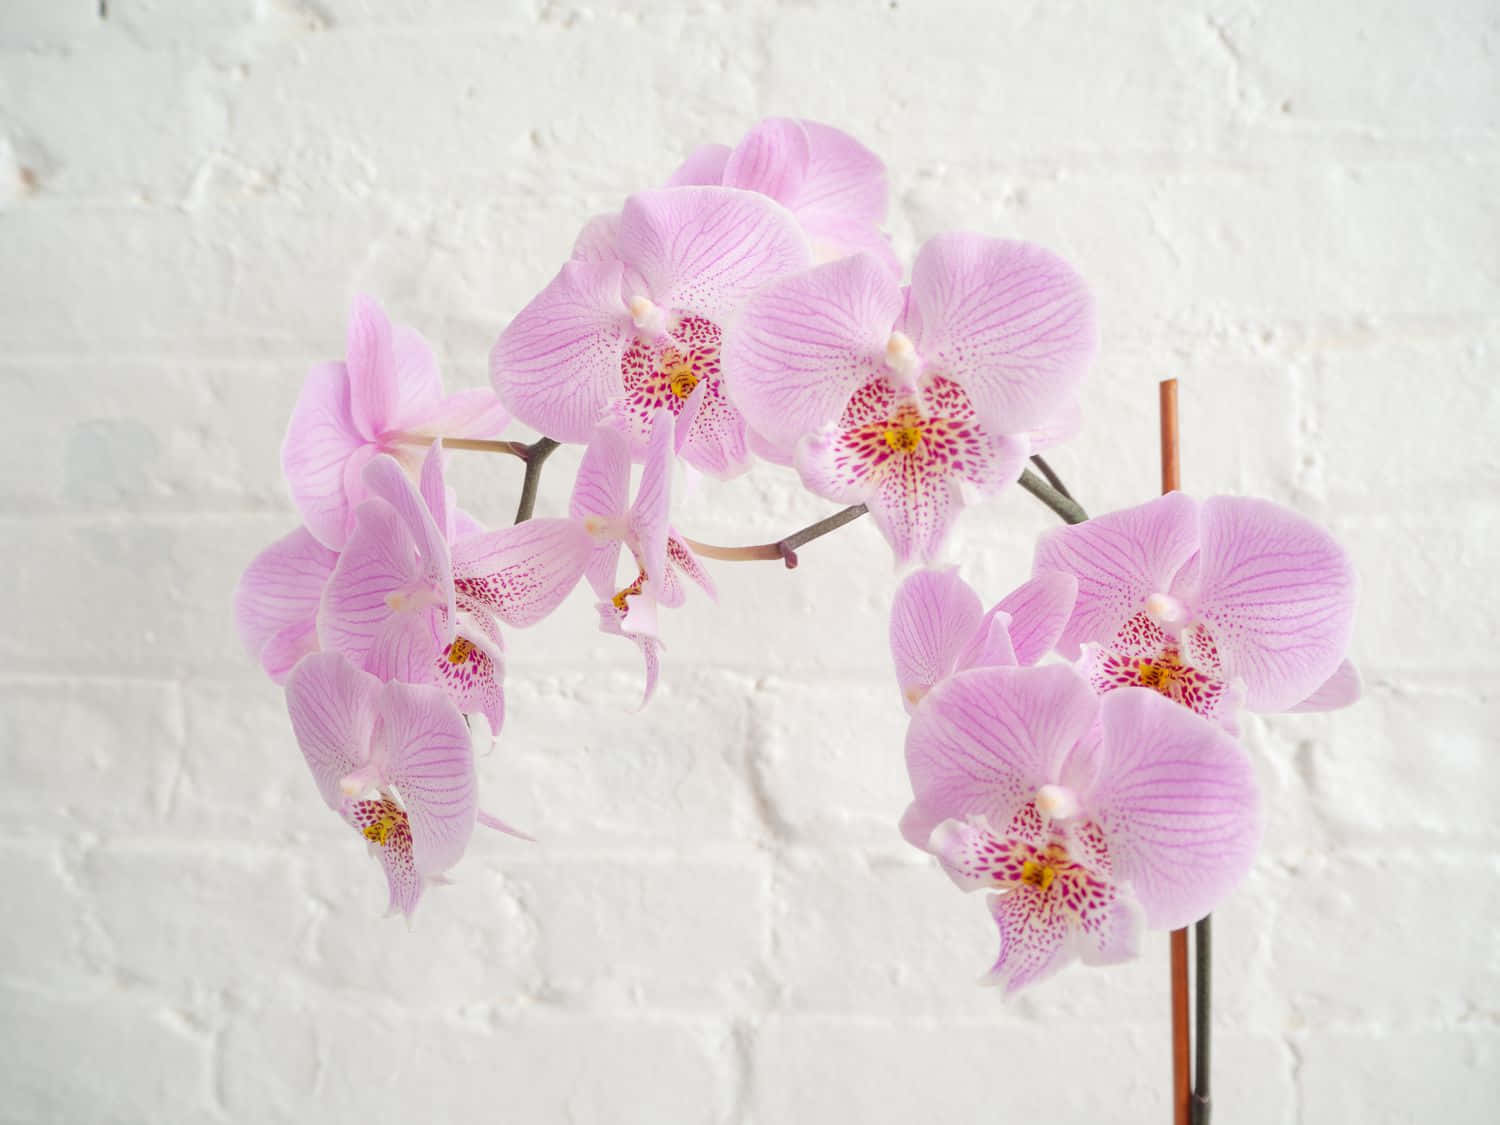 "A majestic, vibrant purple Orchid flower"